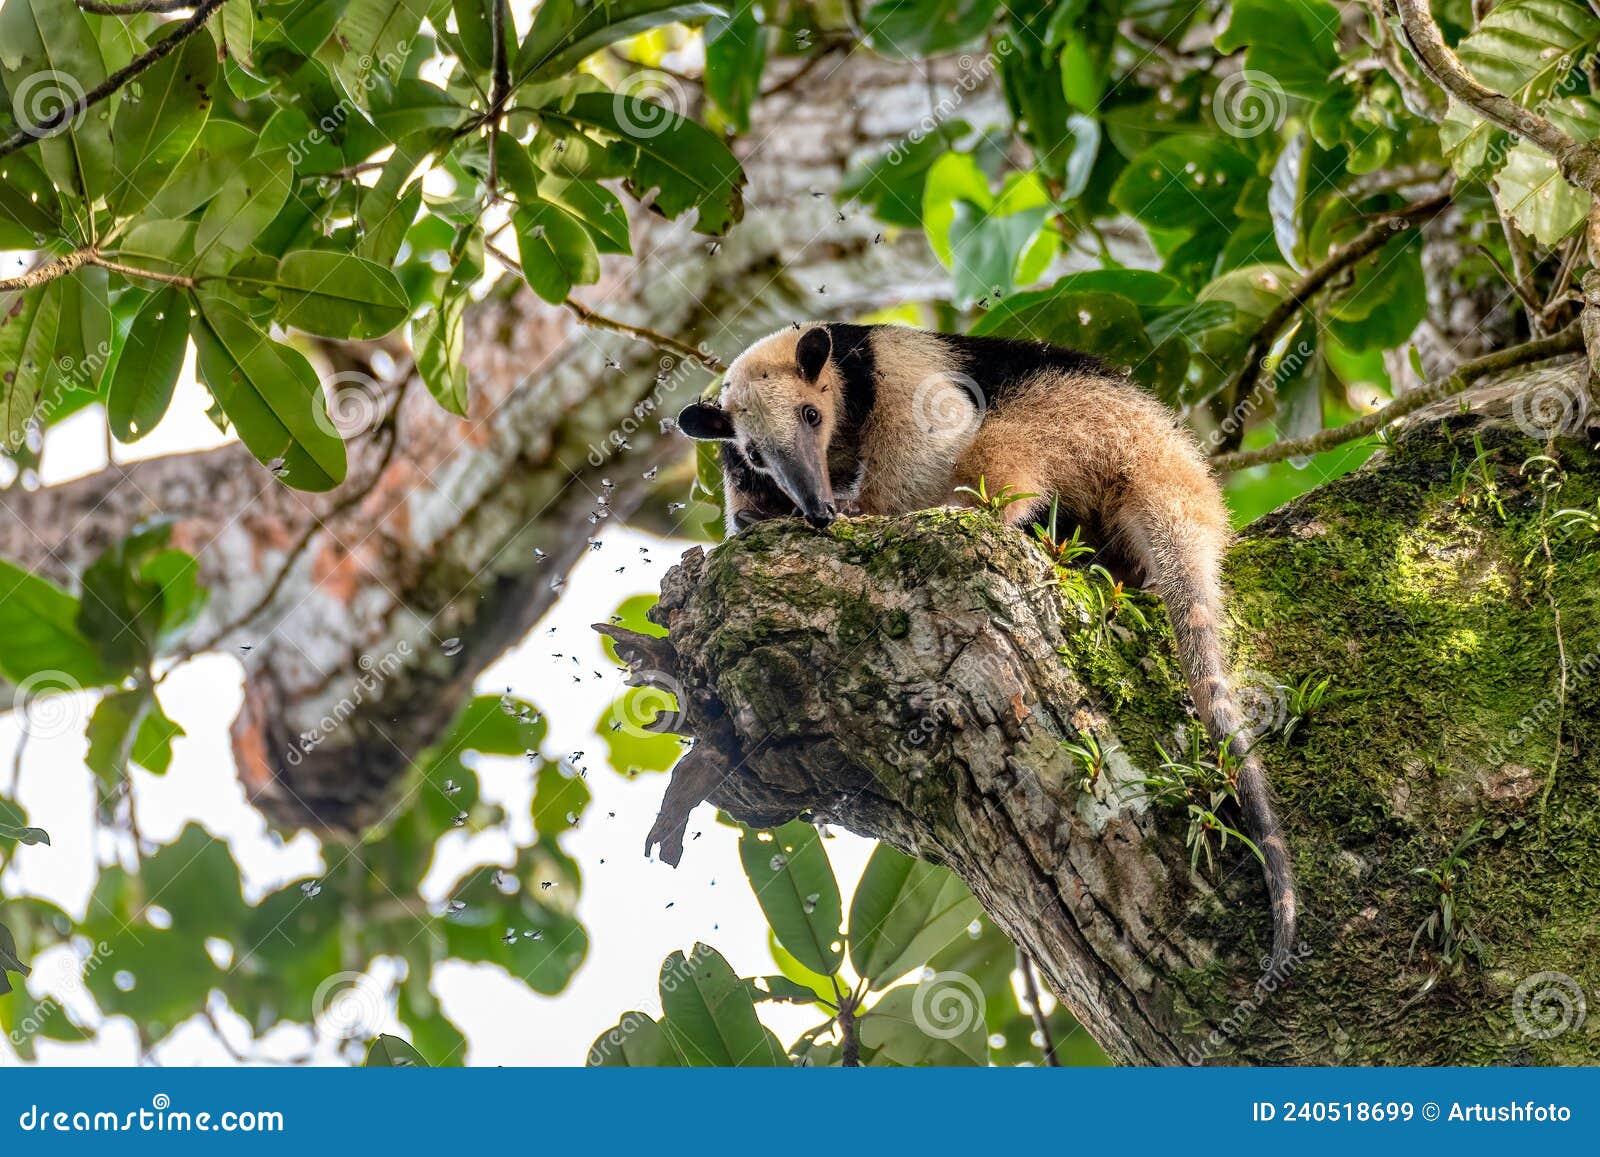 northern tamandua, tortuguero cero, costa rica wildlife